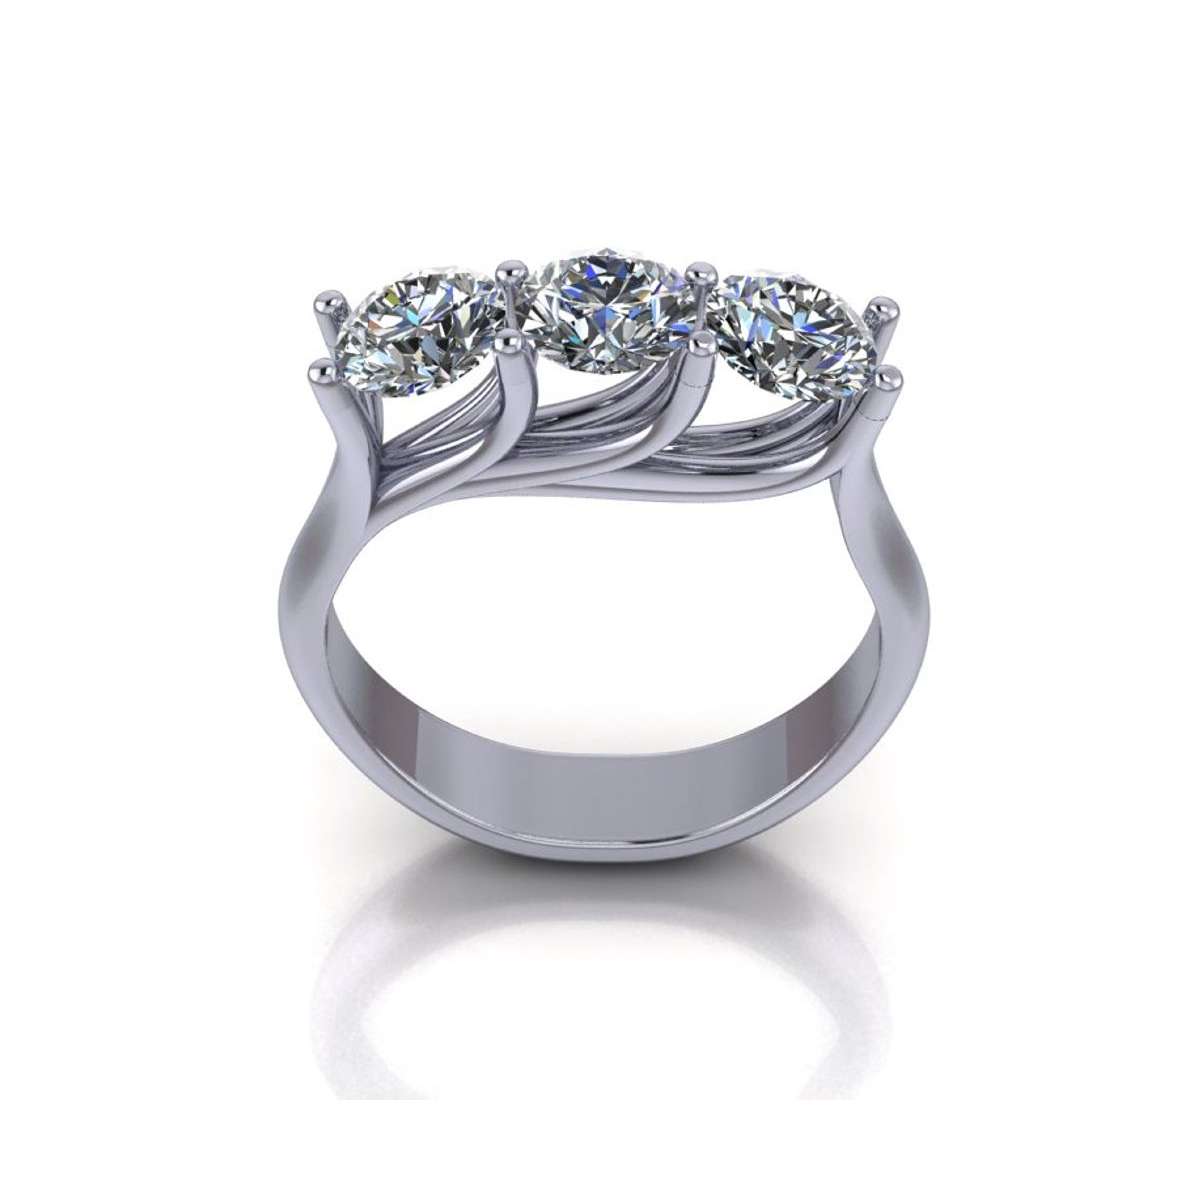 Platinum Trilogy ring 1.5 carats GIA certified diamonds G-IF